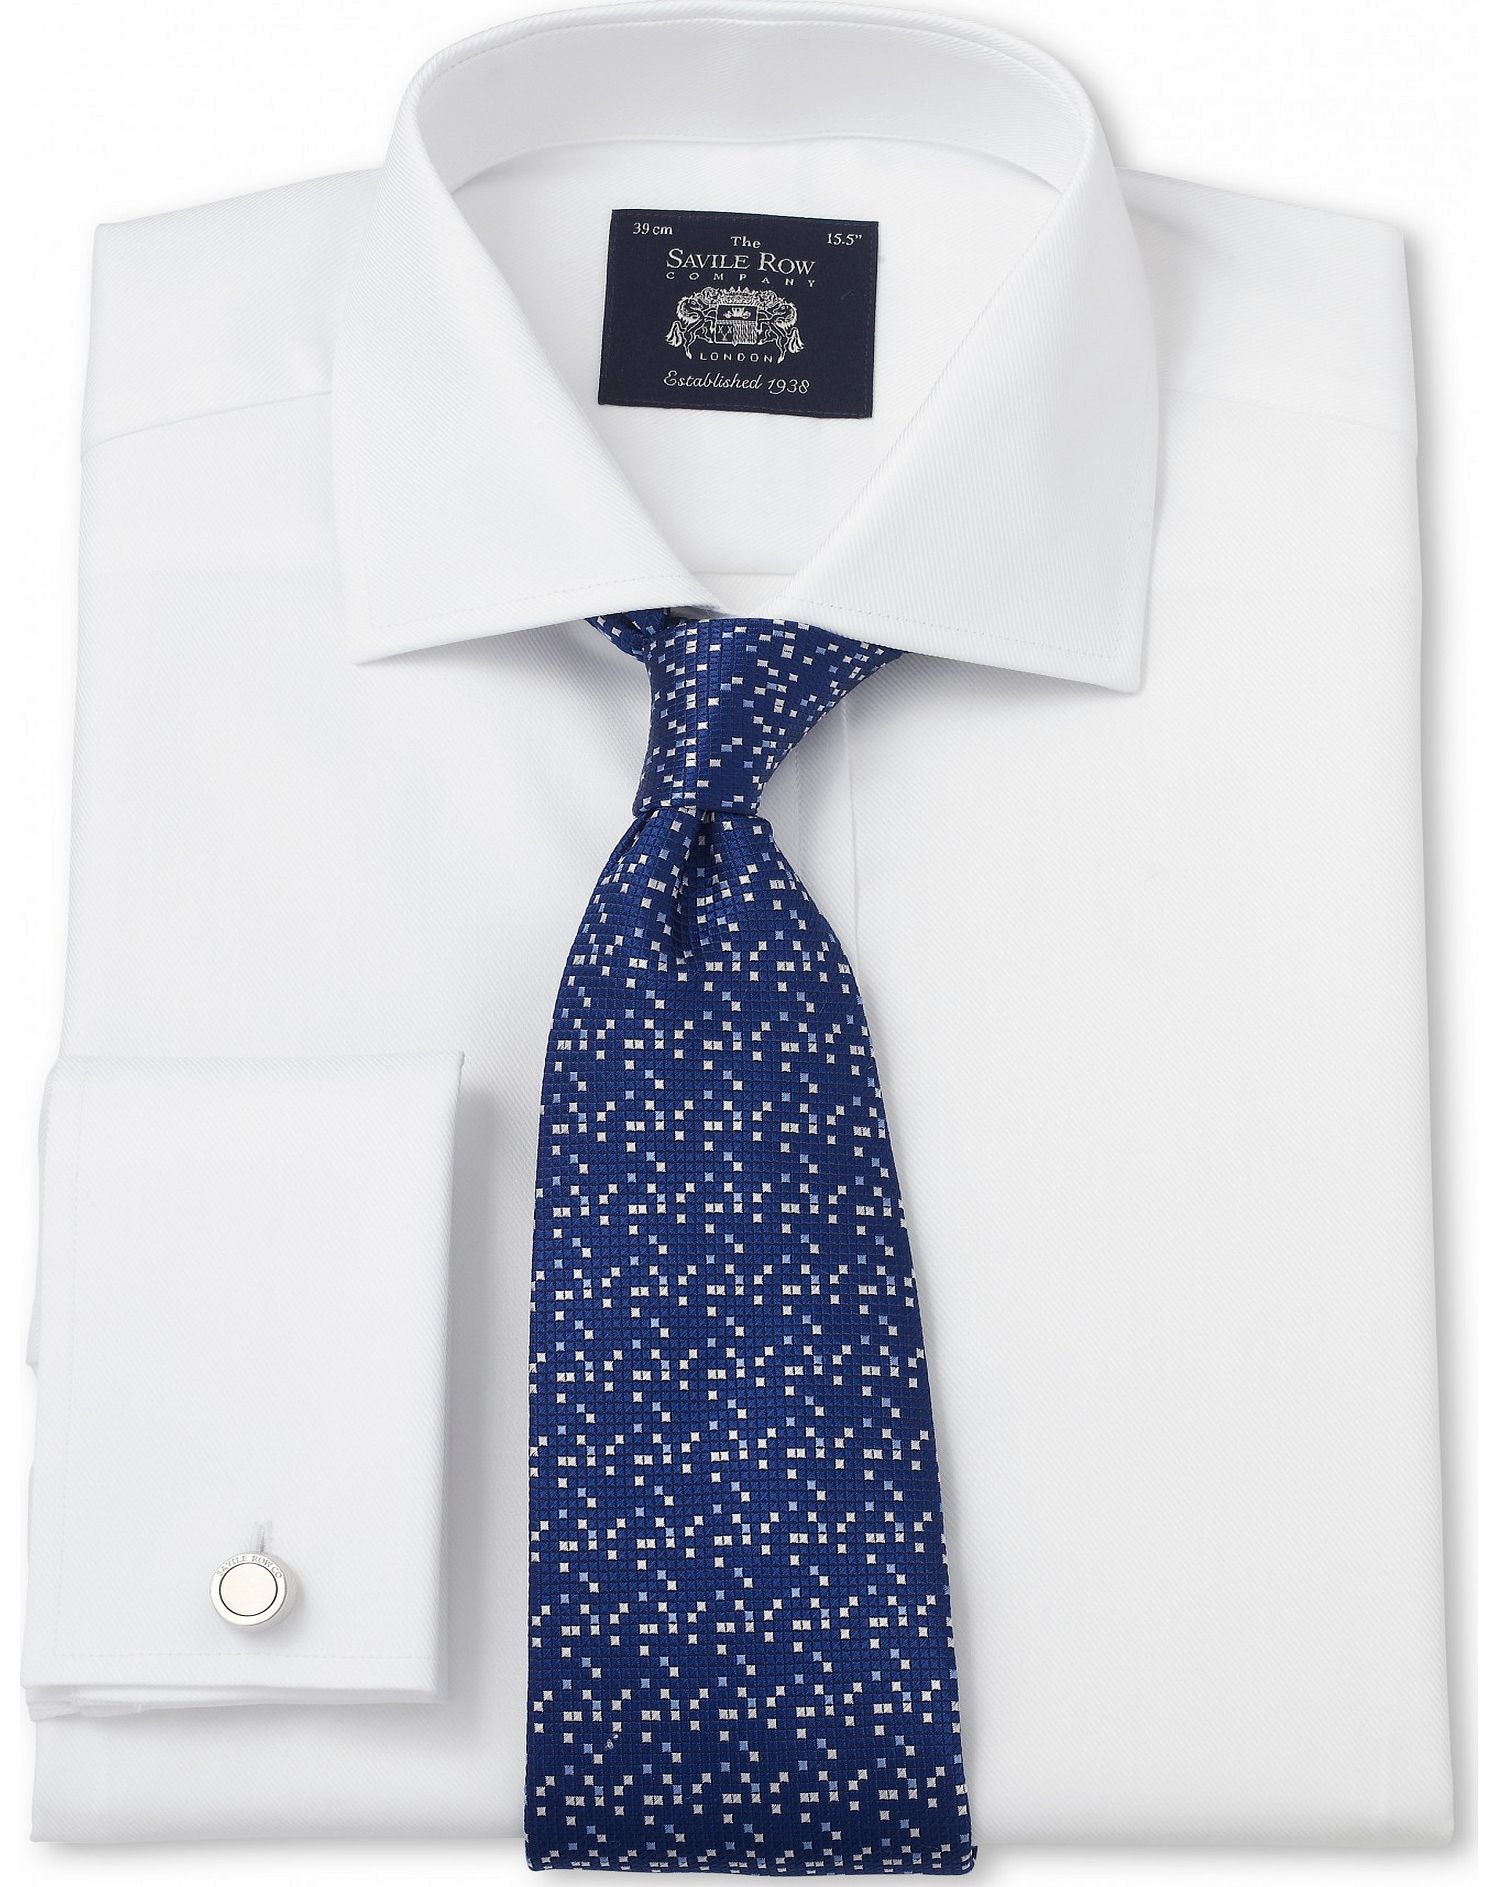 Savile Row Company White Twill Slim Fit Shirt 16 1/2`` Lengthened